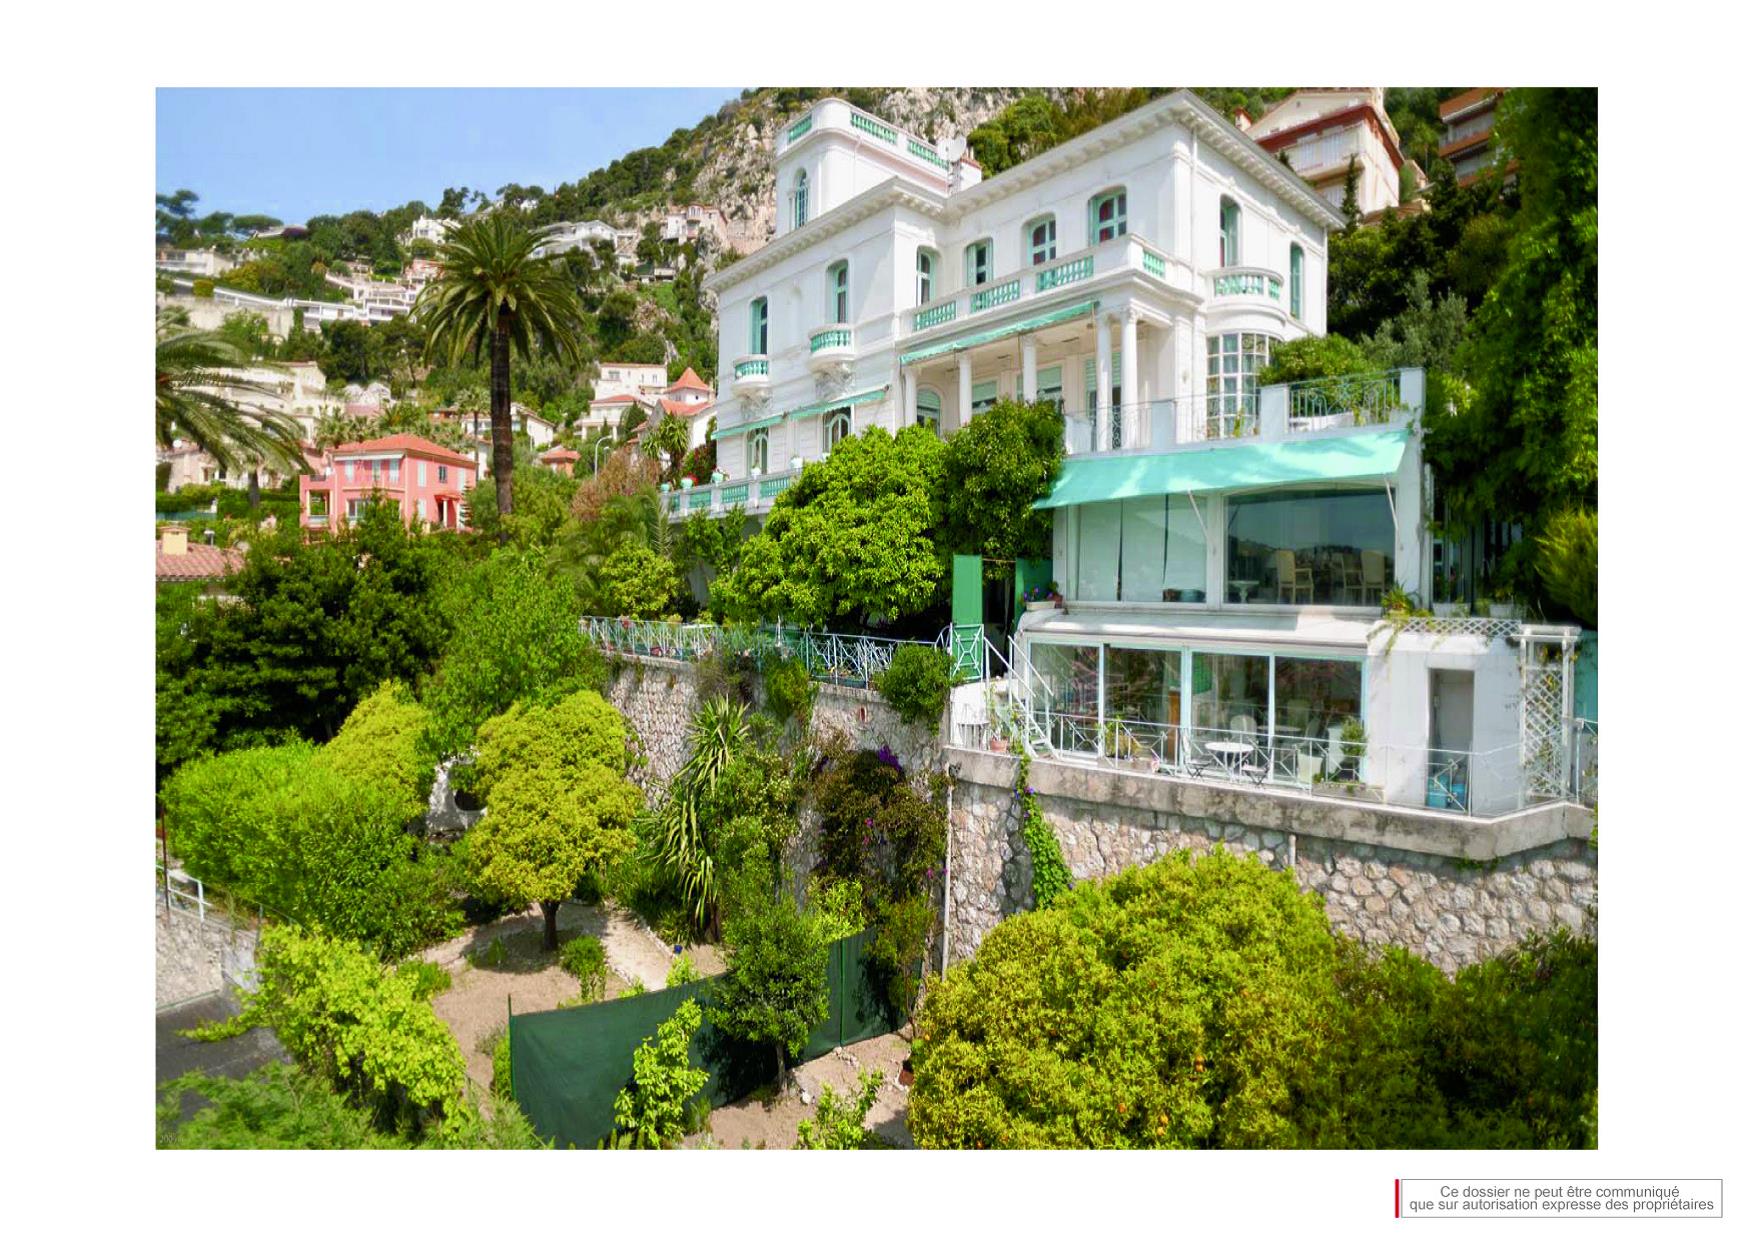 1900’s Belle Epoque Villa near Monaco